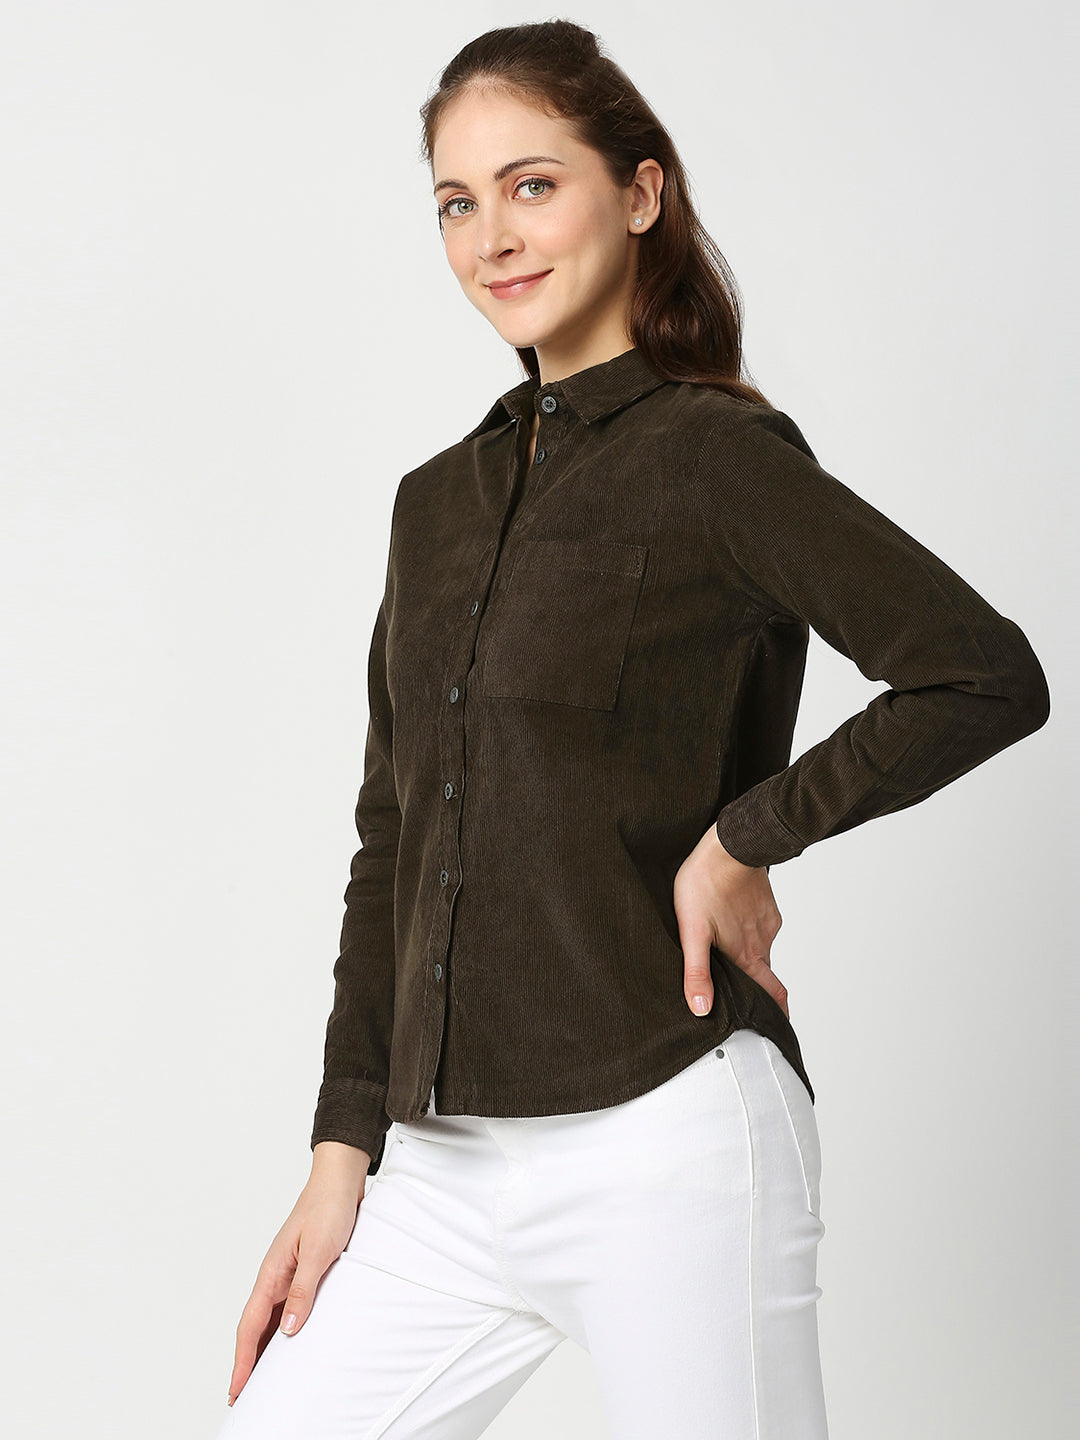 Buy Blamblack Women's Olive Color Full Sleeves Round Neck Shirt